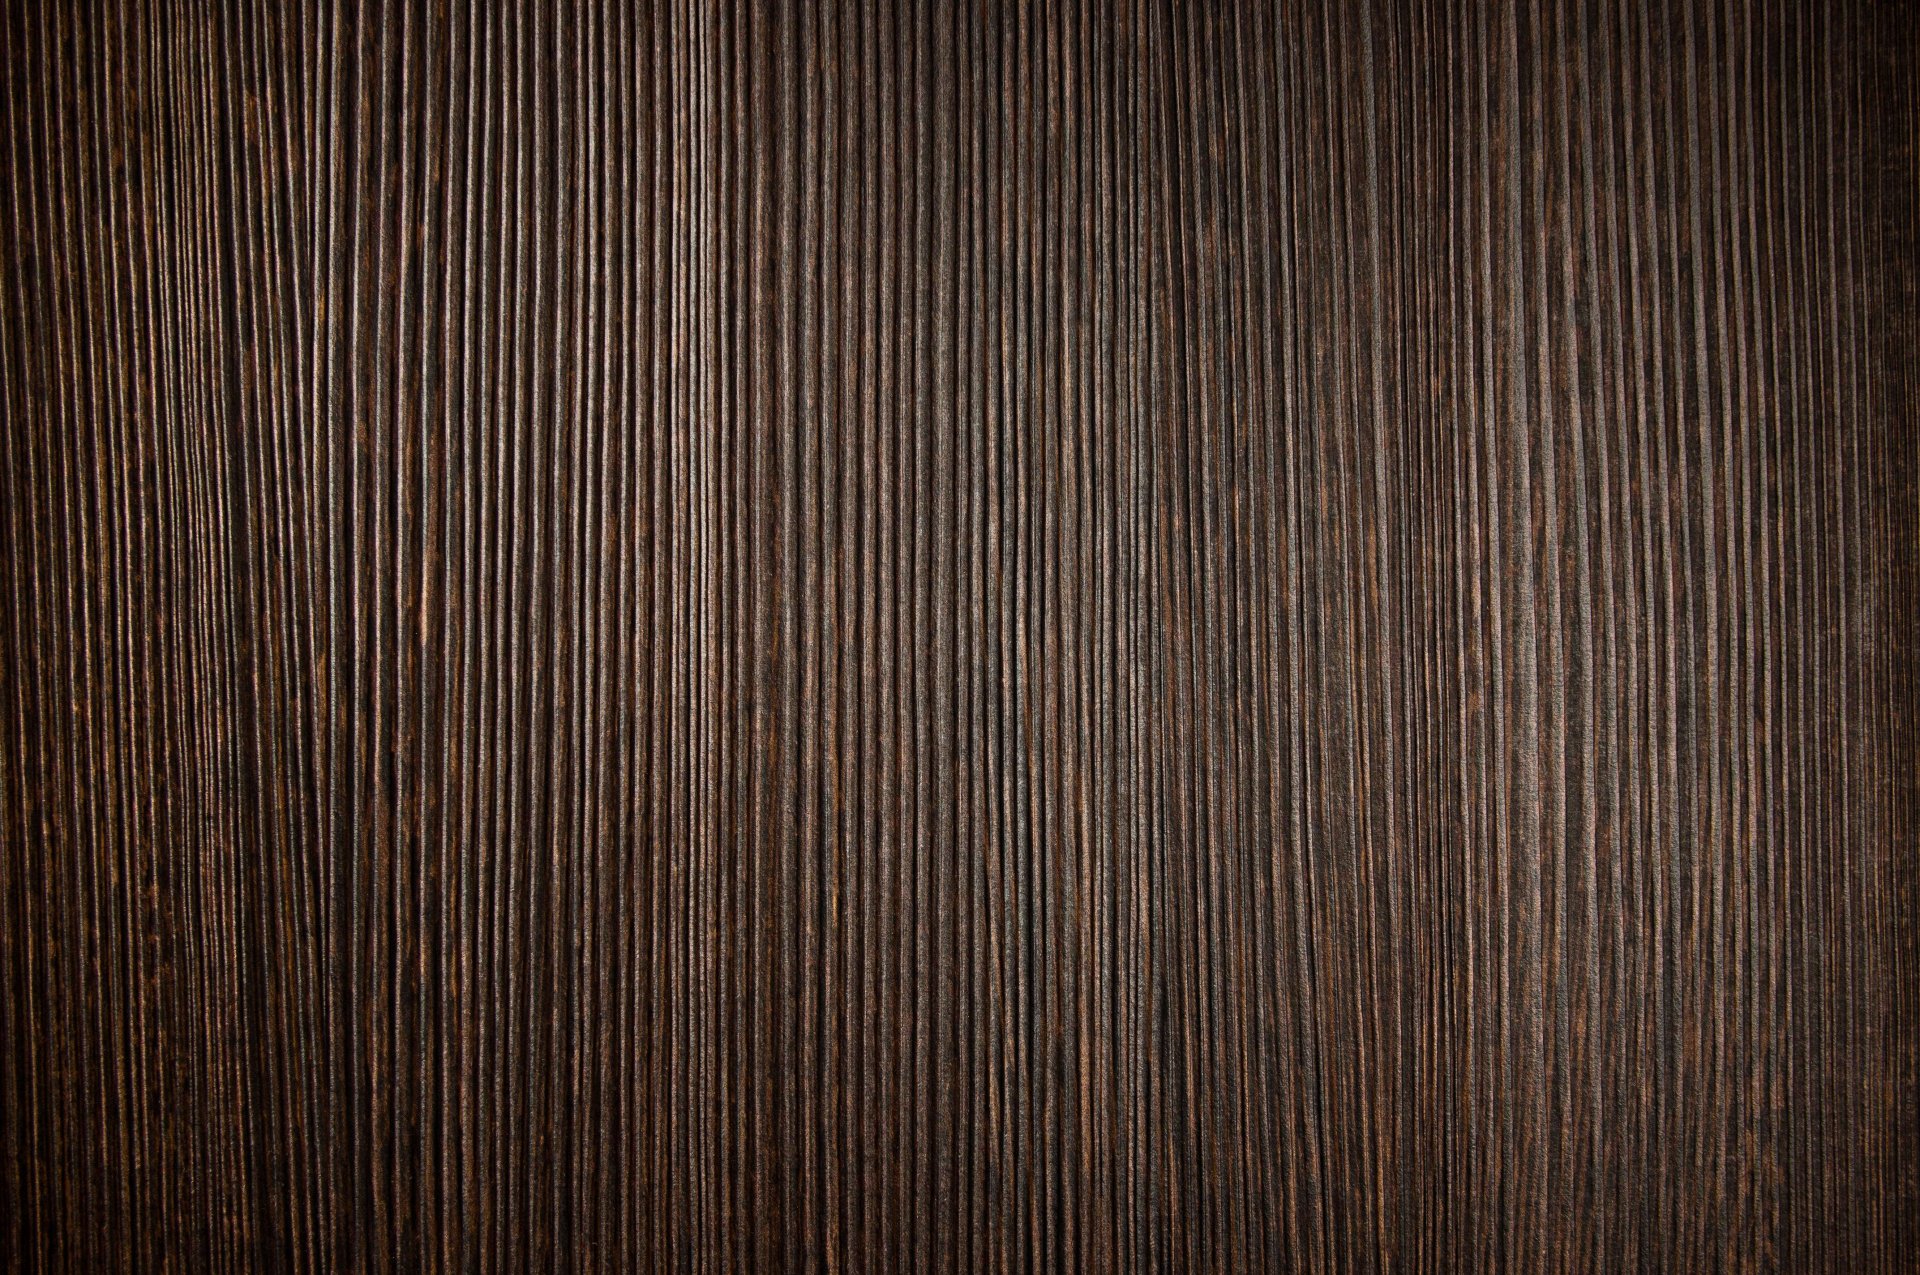 текстура мебели из дерева